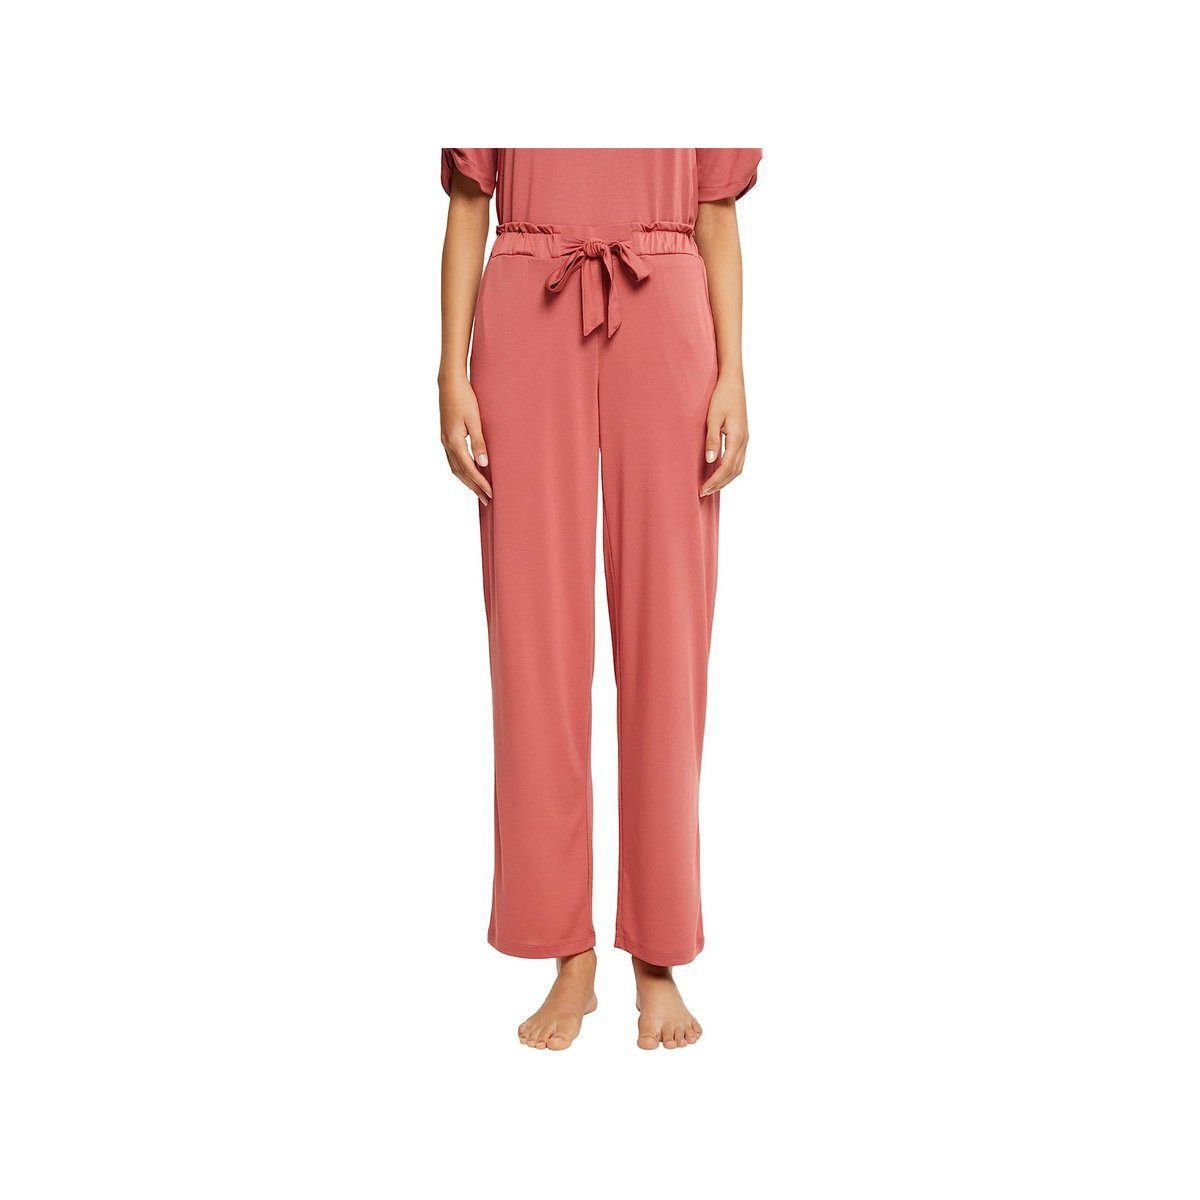 Esprit Schlafanzug braun terracotta | Pyjamas